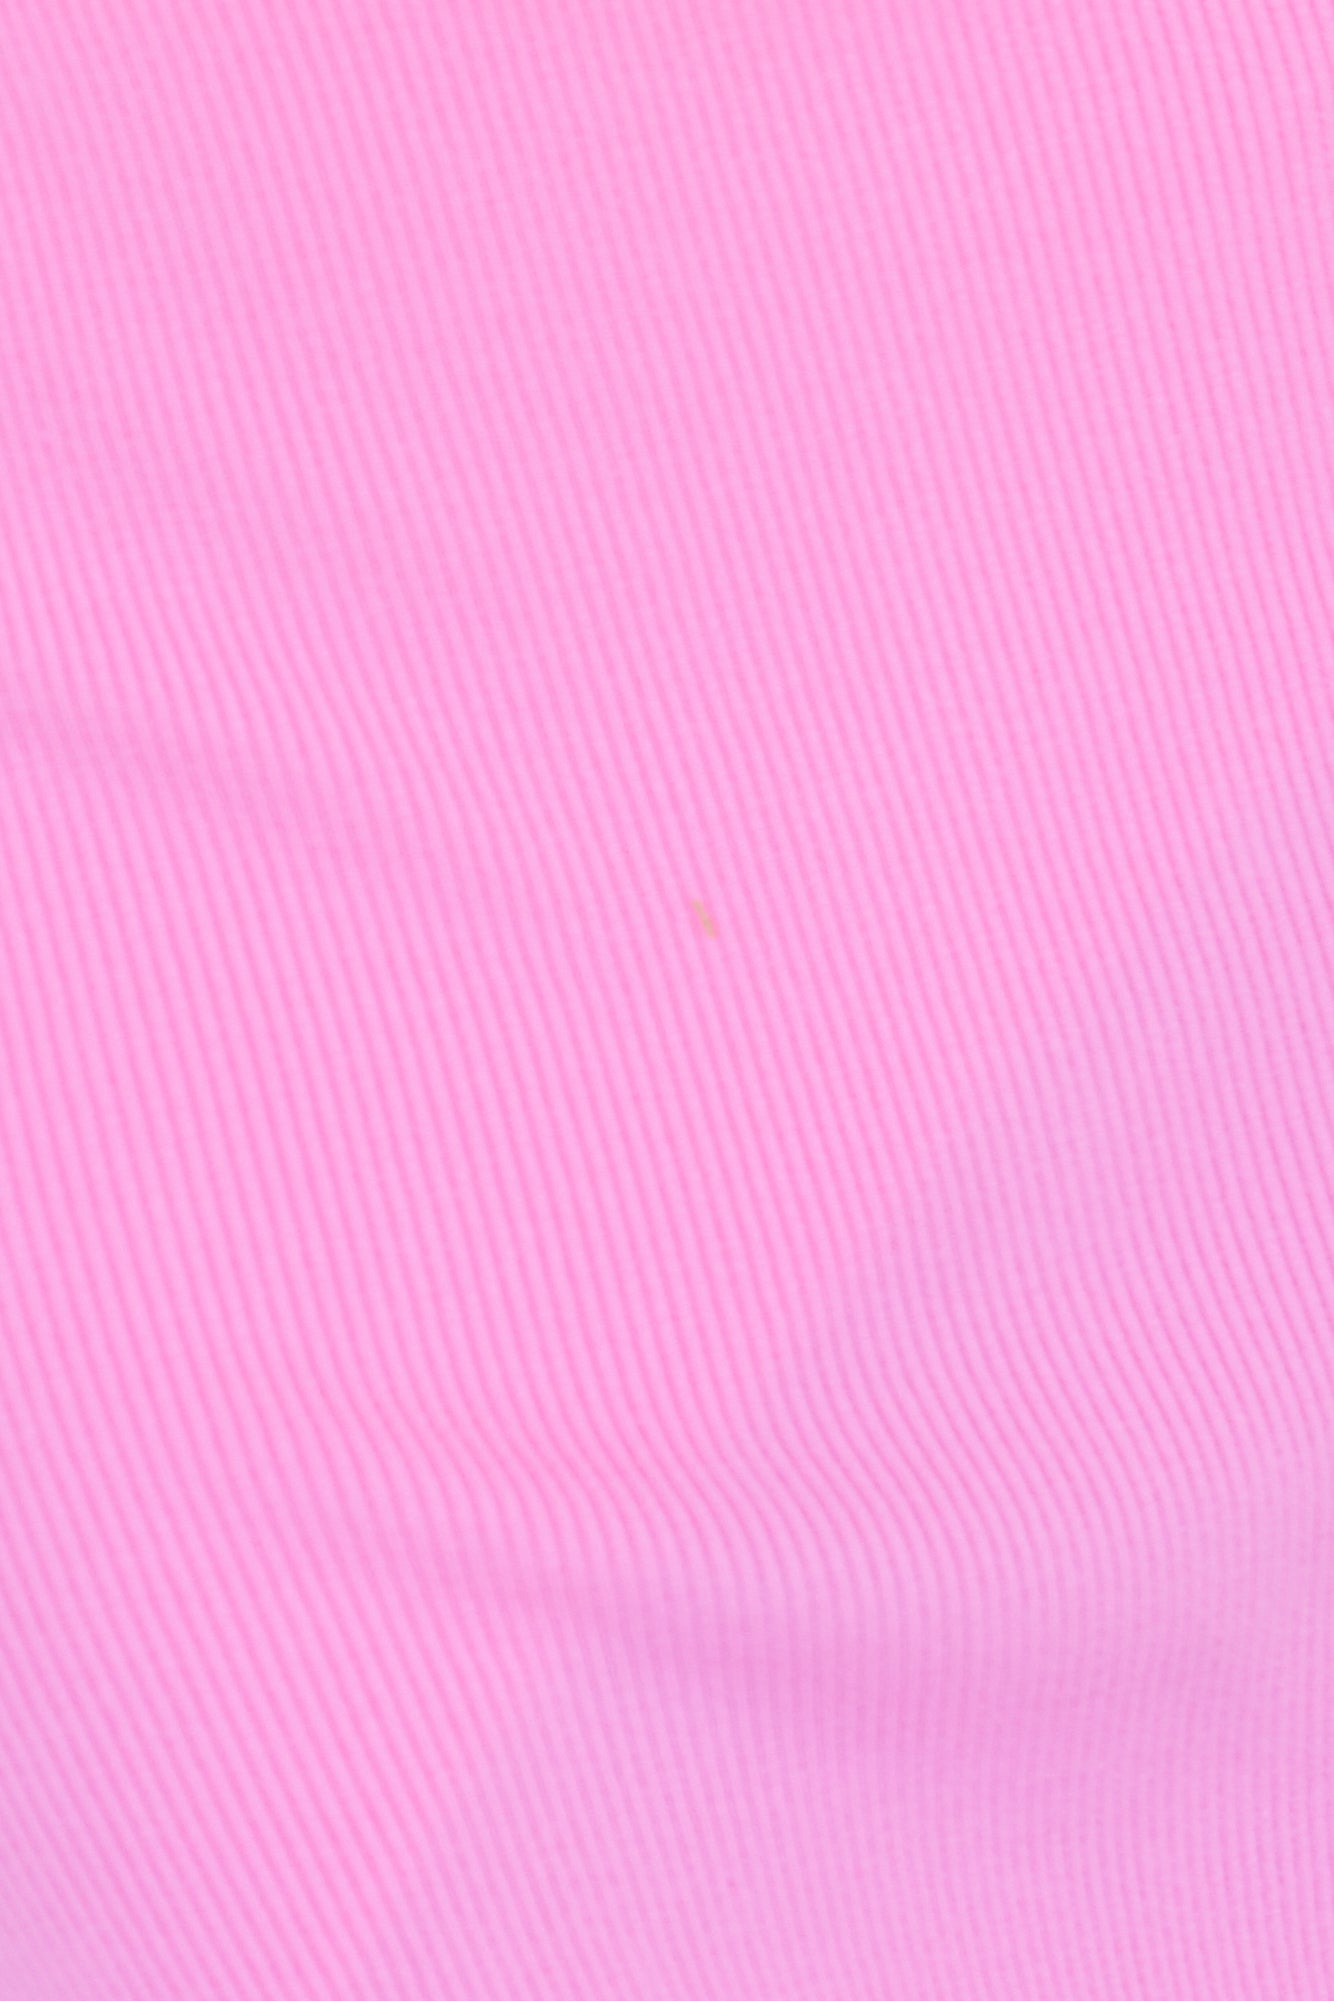 Power Move Midi Skirt Pink